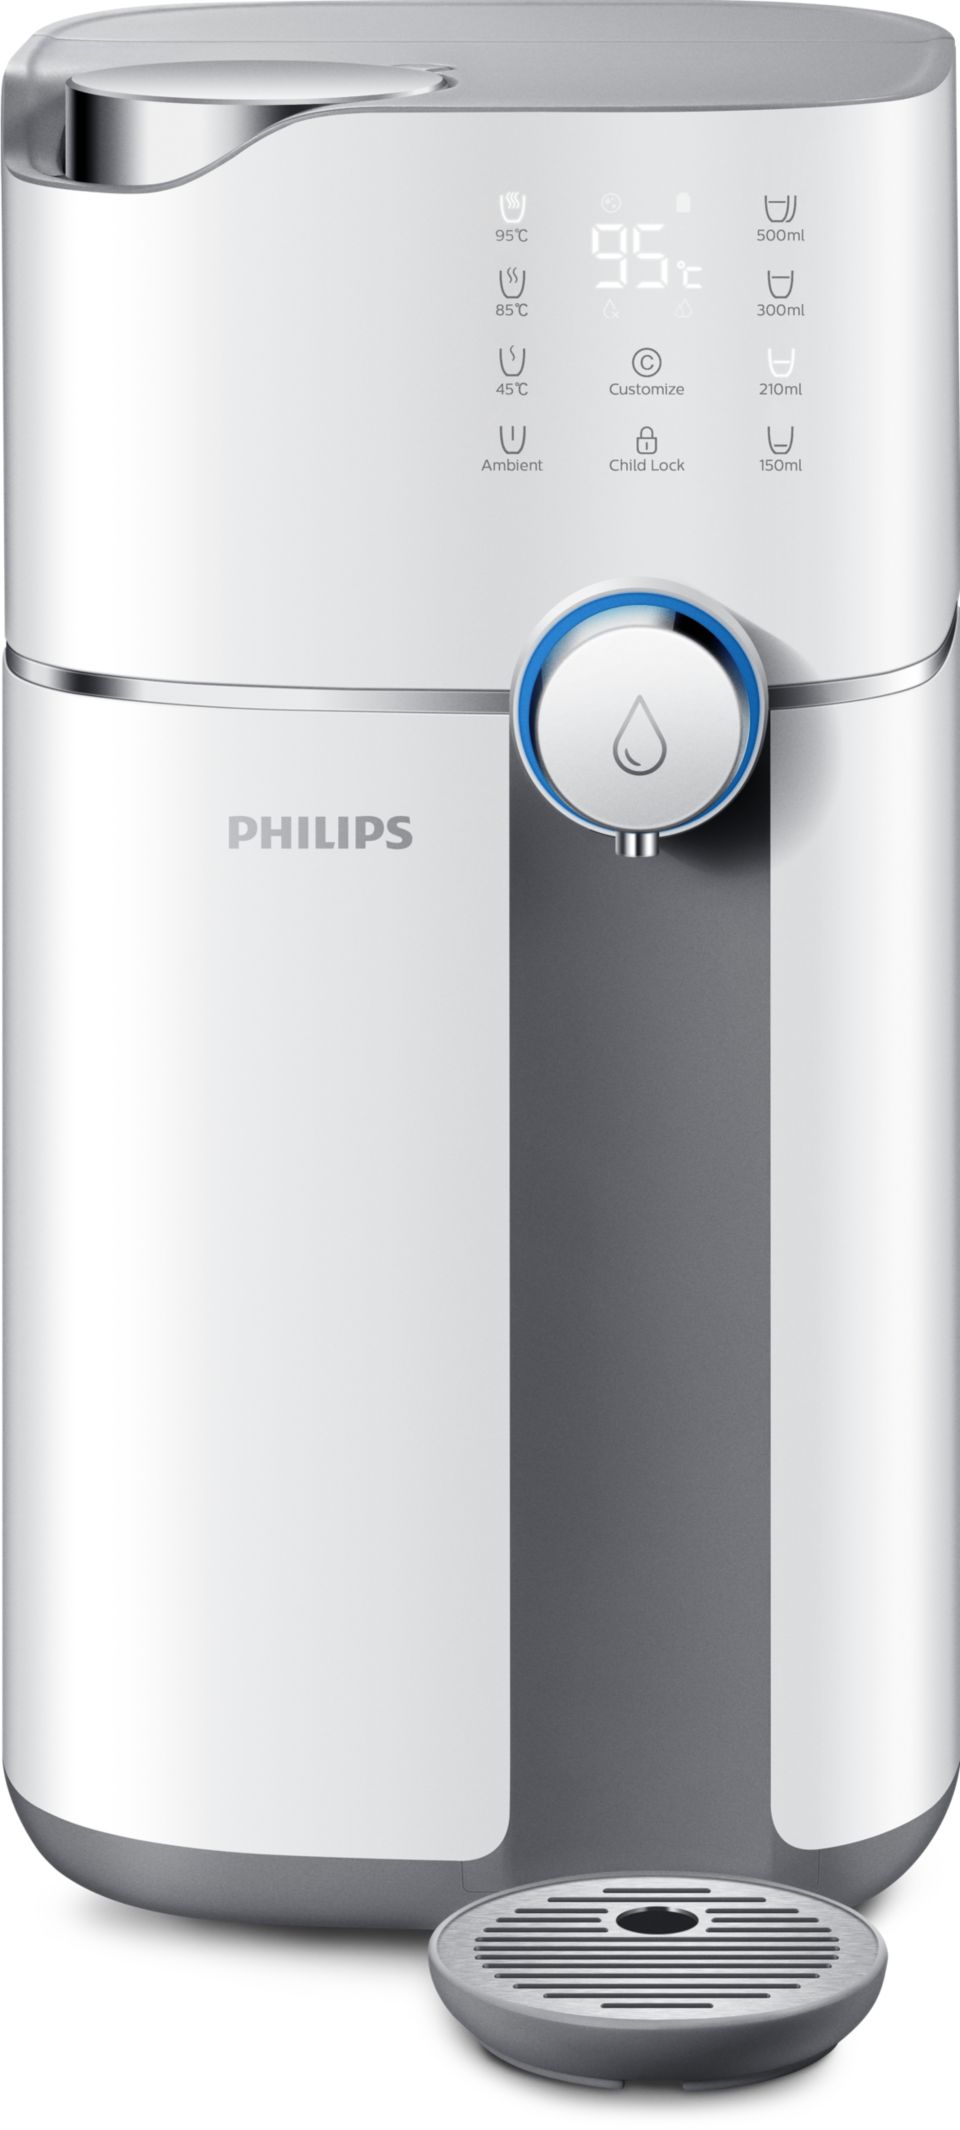 Original) Philips ADD6910 Instant Water Dispenser RO Filter Heating in 3  Seconds Water Dispenser Pure Water Purifier